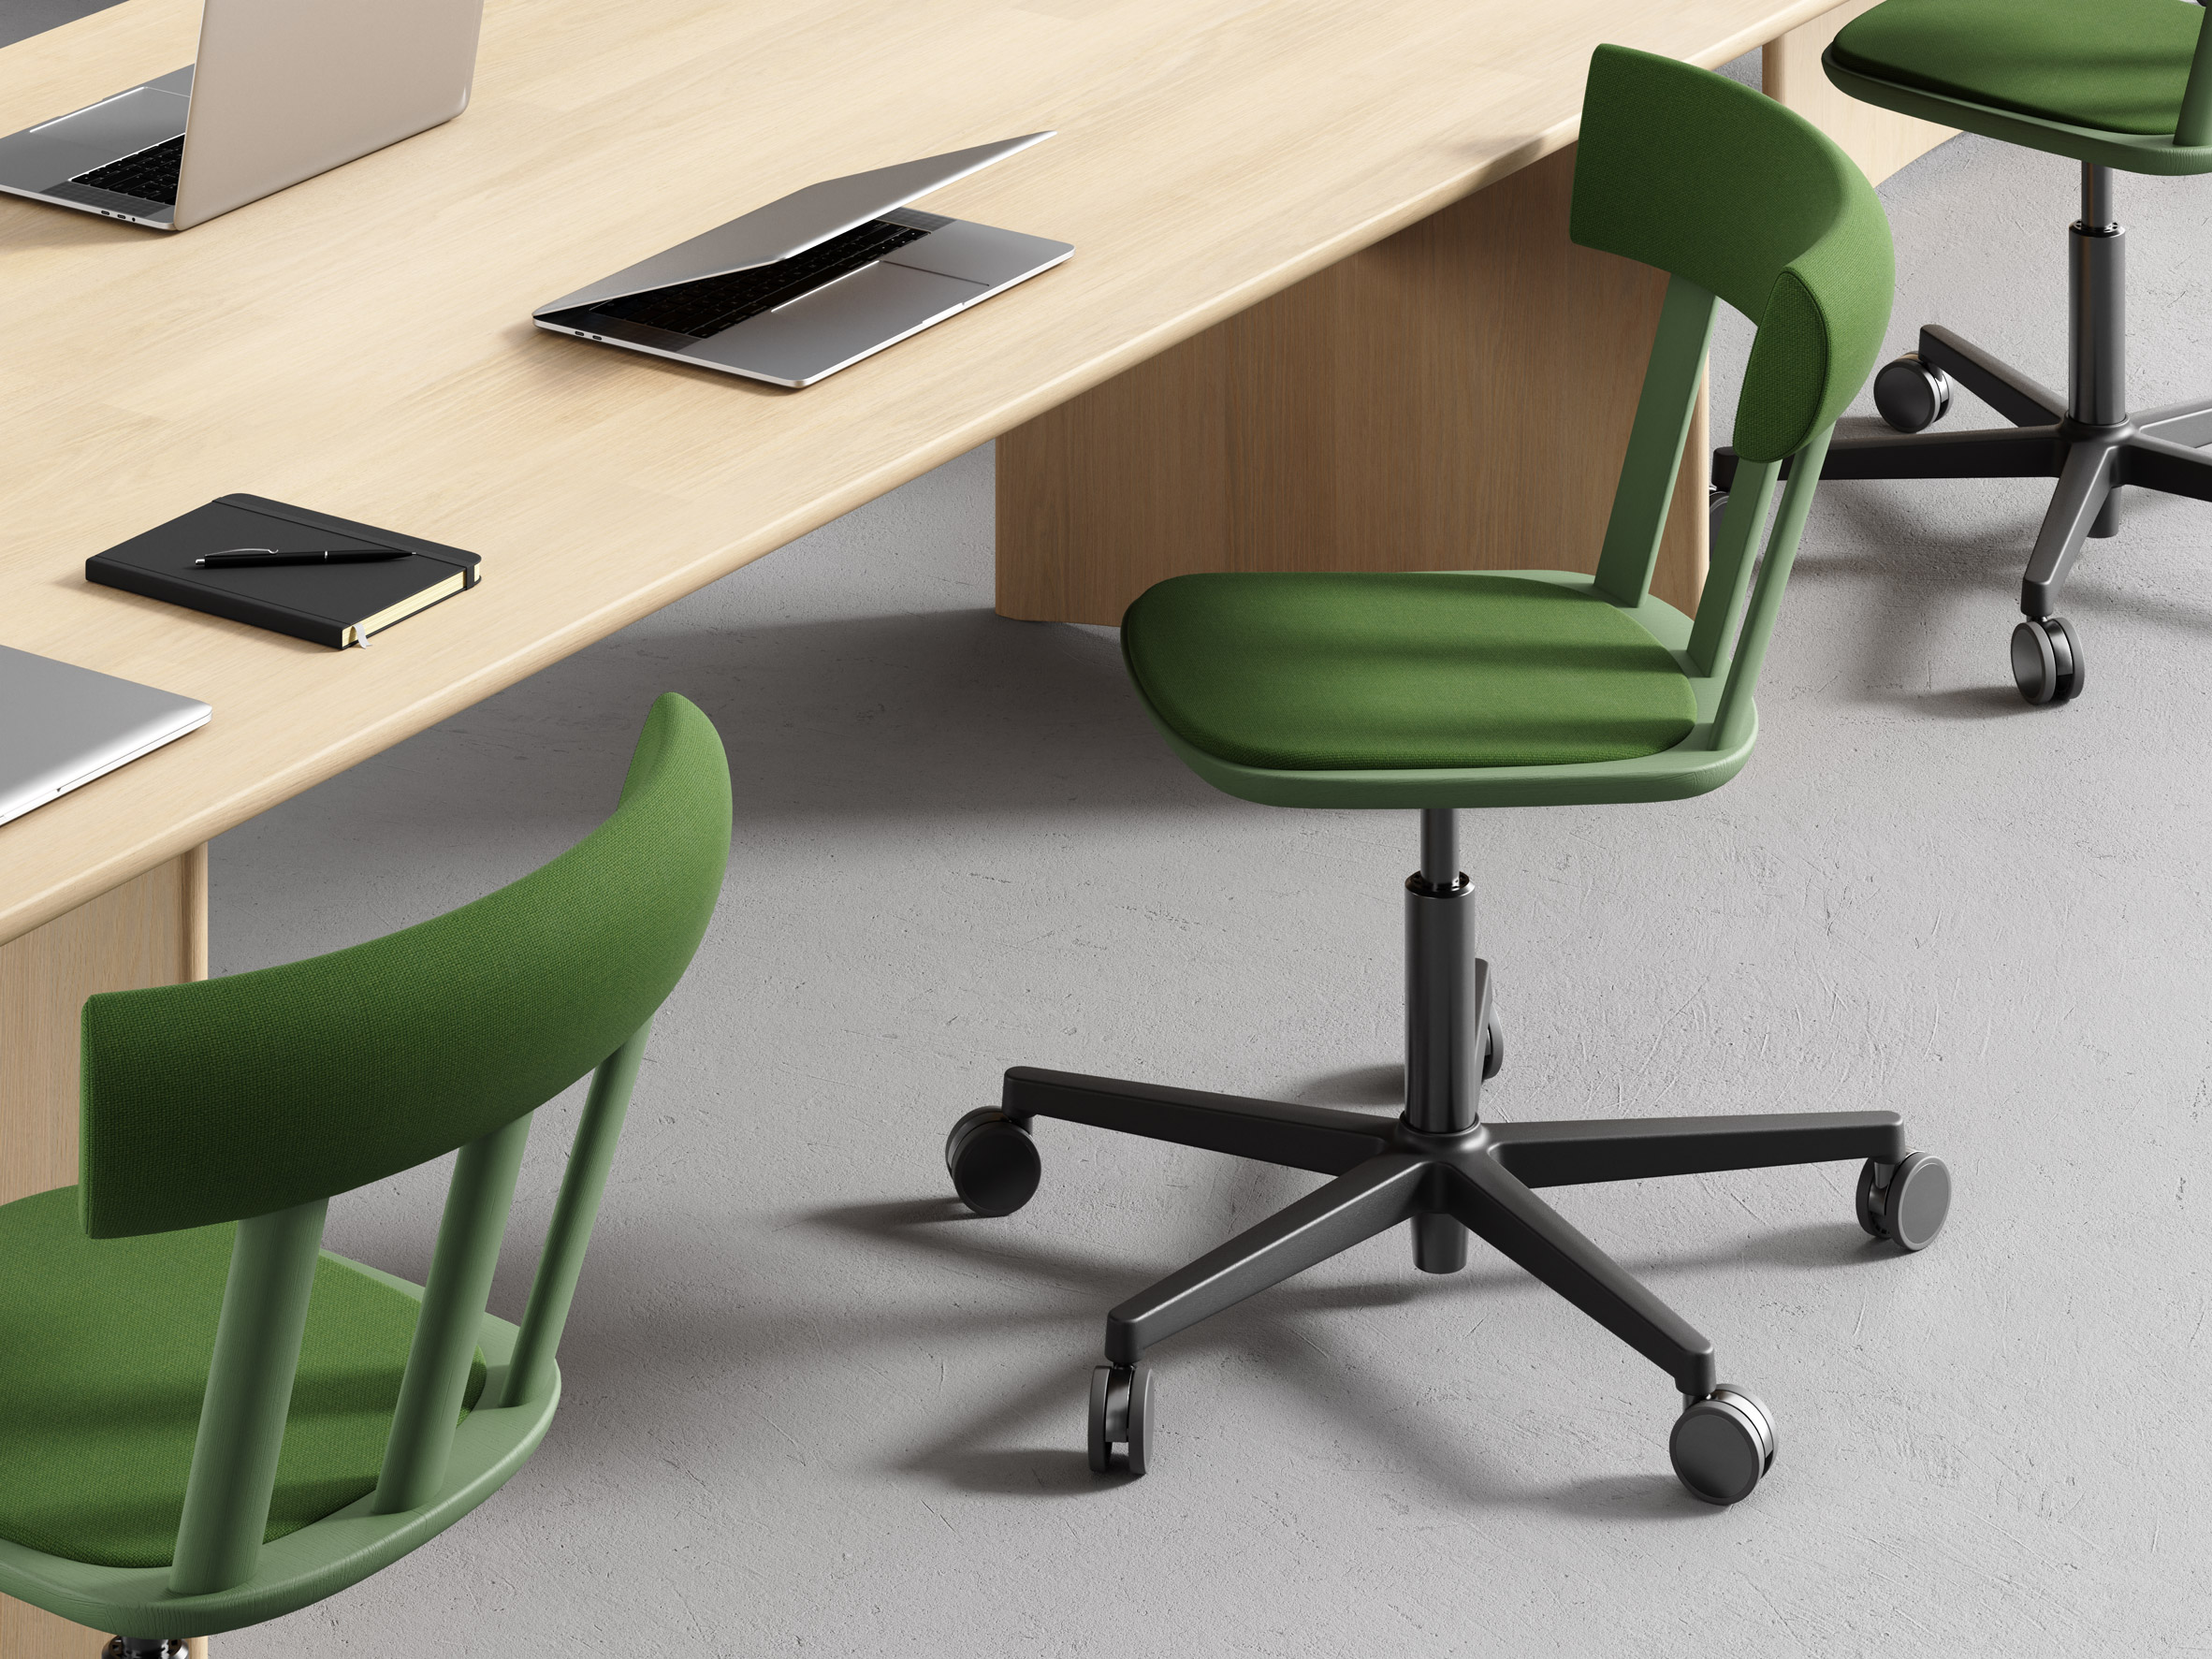 Green swivel chair in front of desk